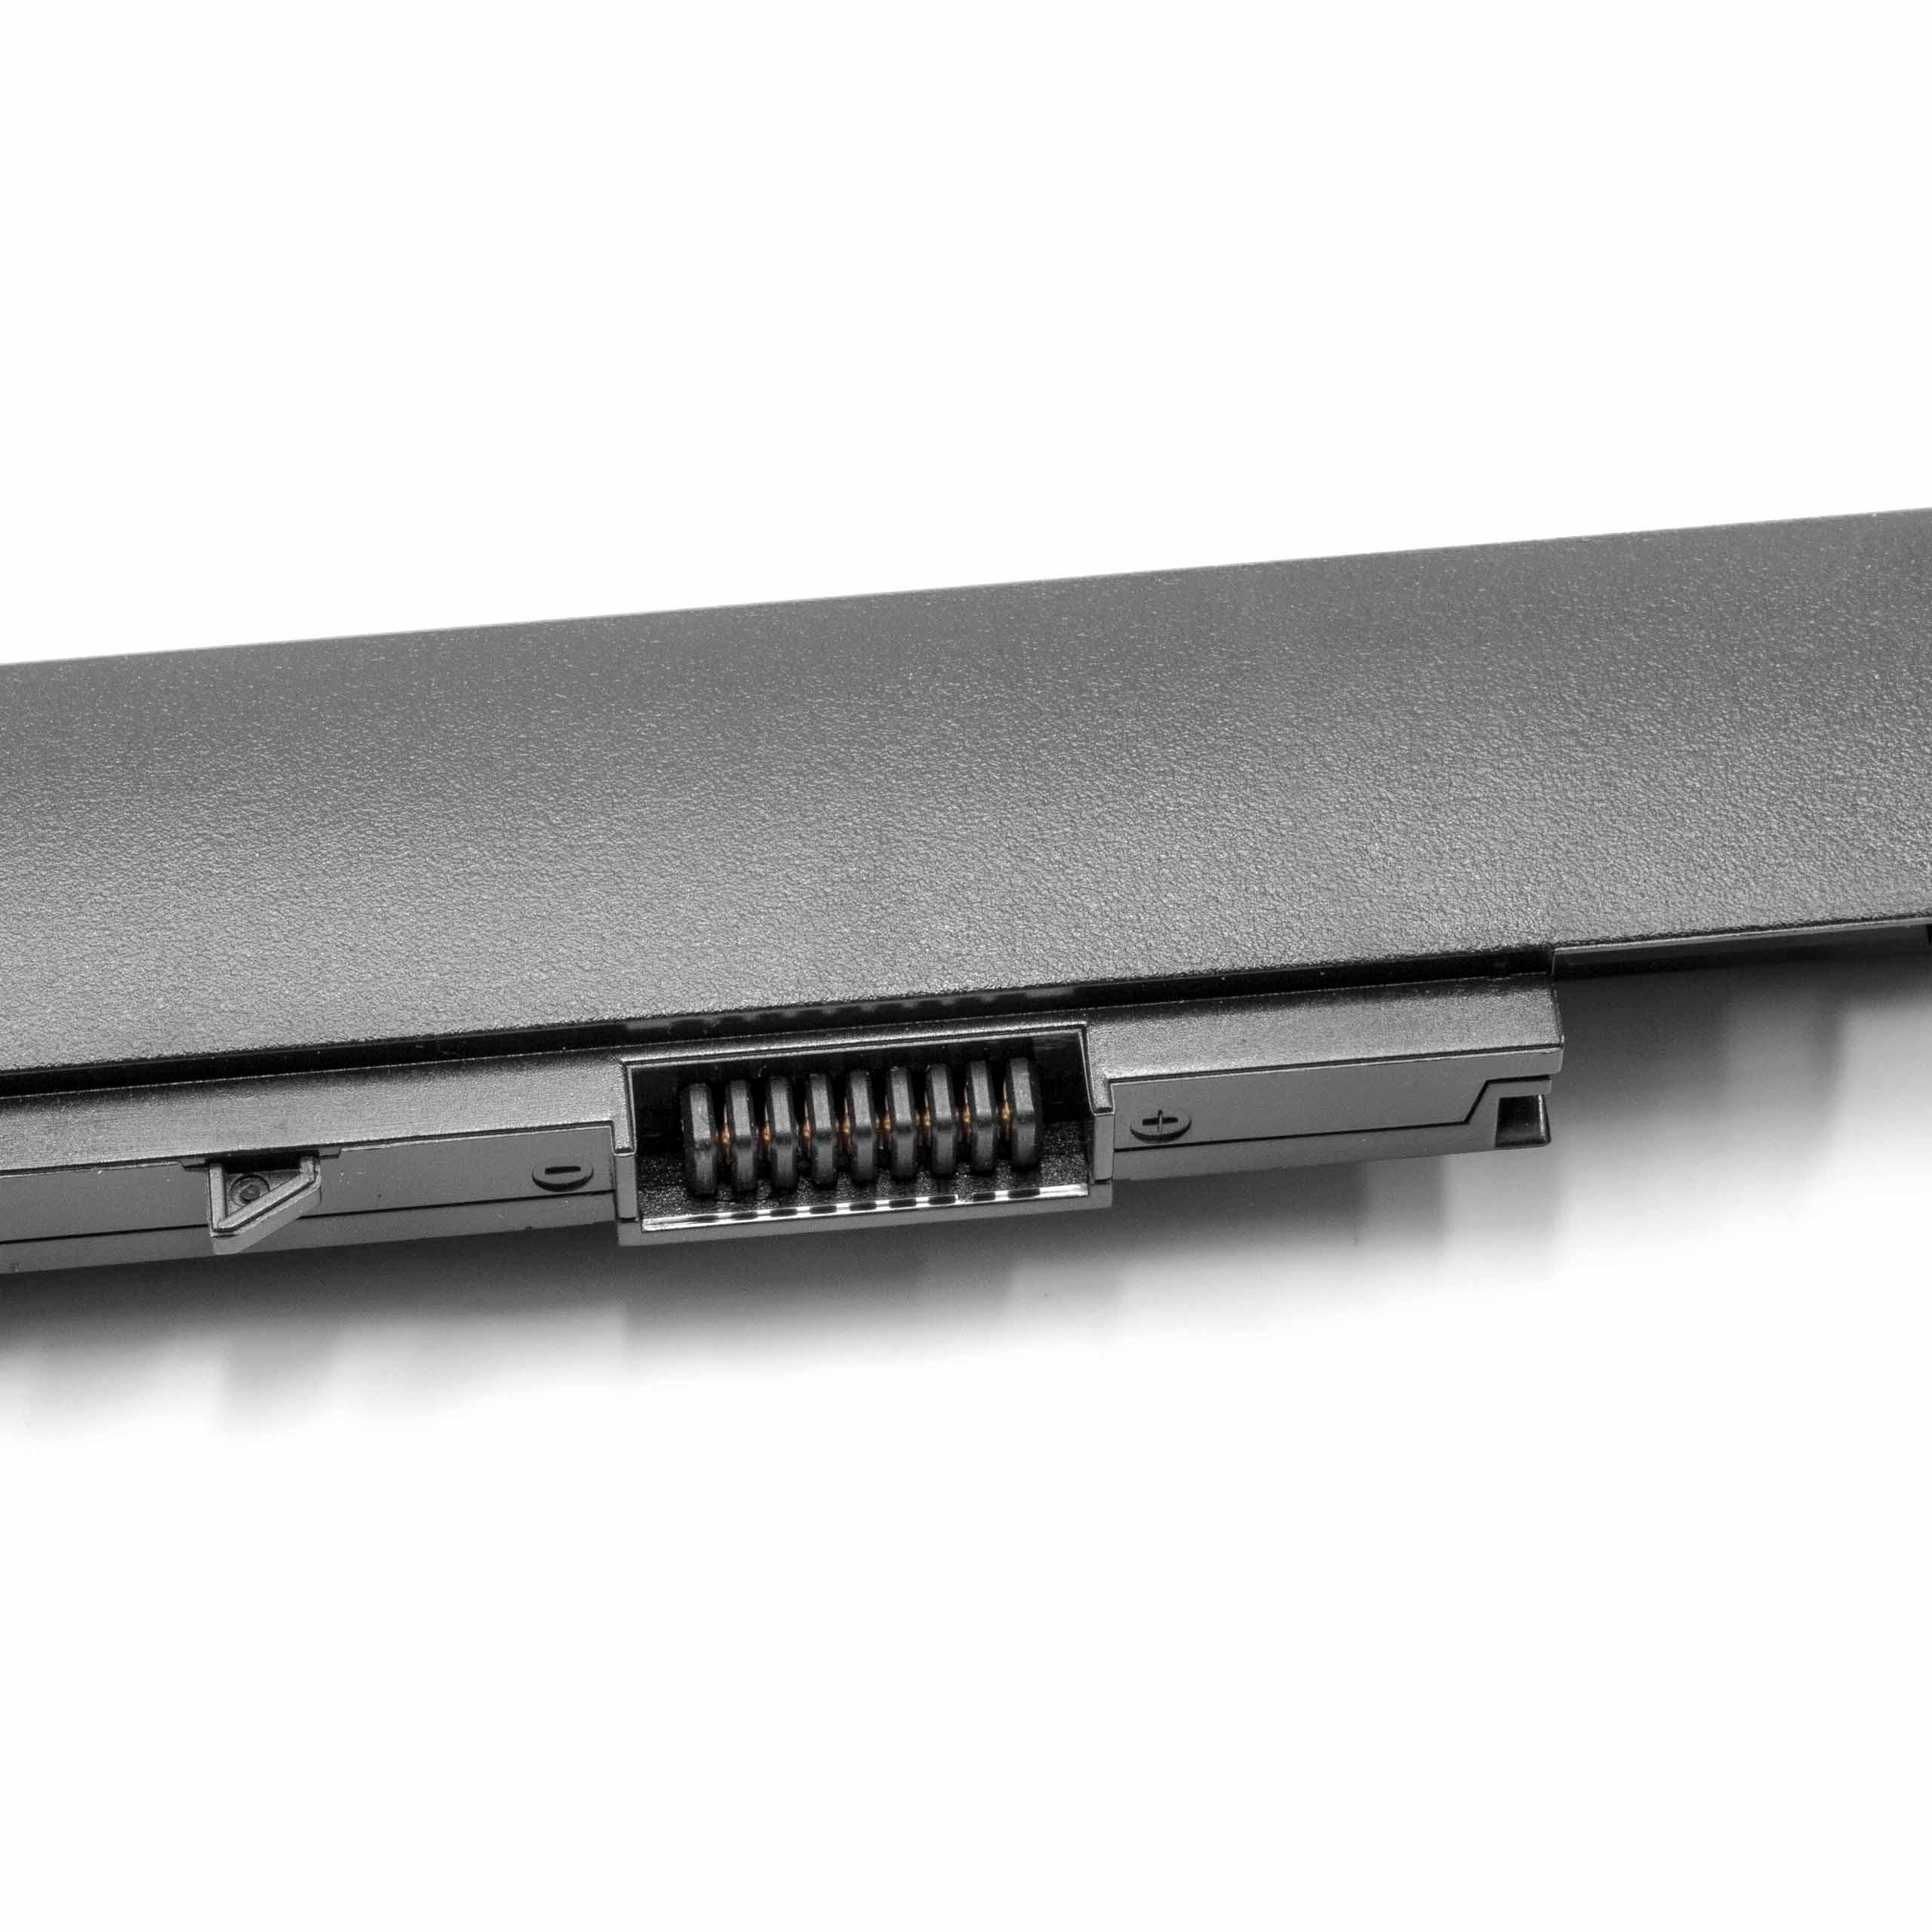 15g-ad101TX, passend vhbw Laptop-Akku HP 2600 mAh 15g-ad100, 15g-ad102TX, Pavilion für